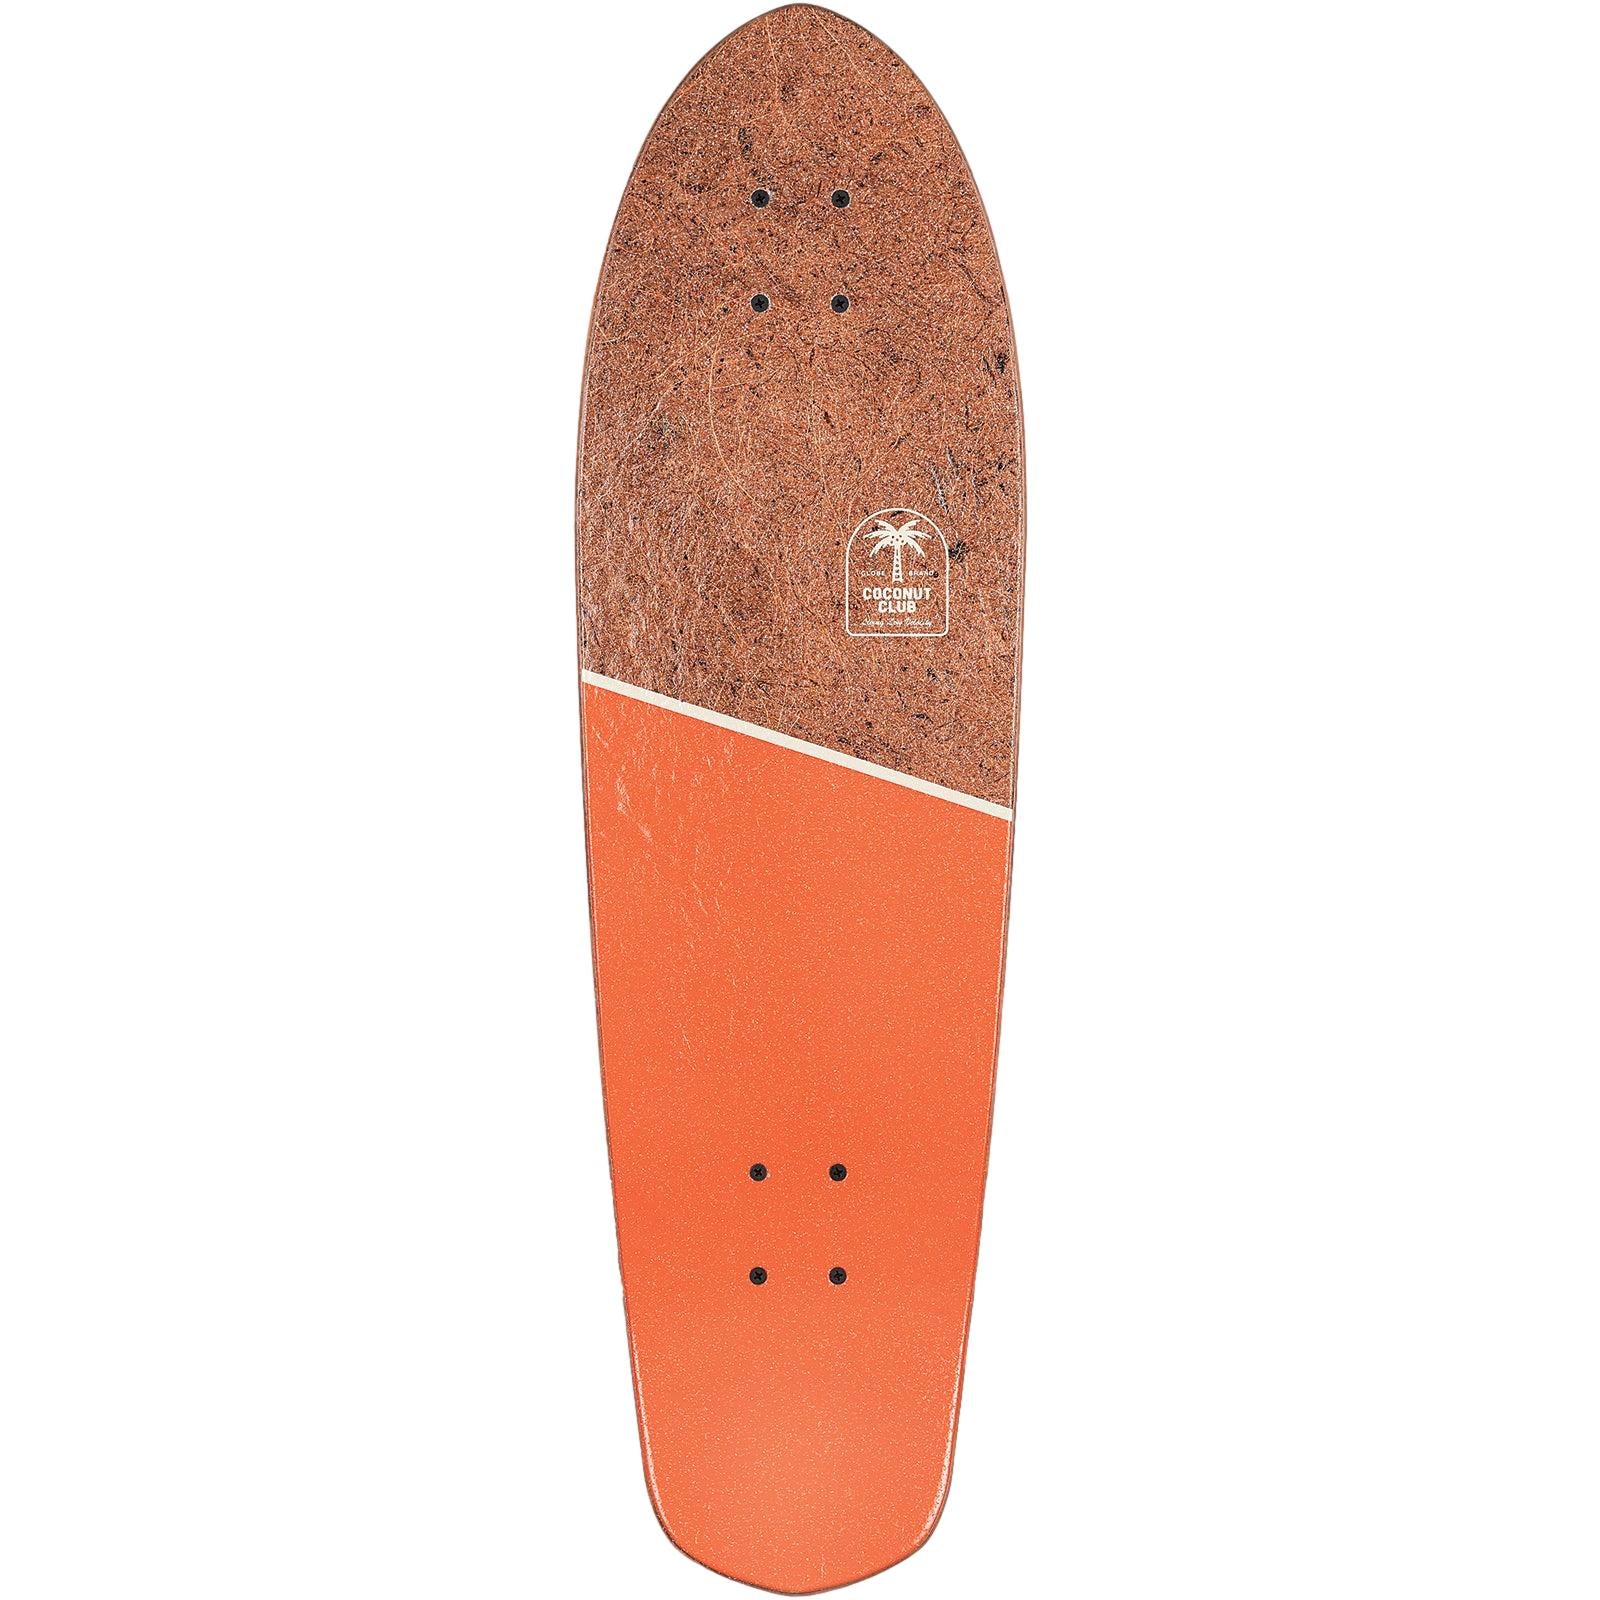 Big Blazer Coconut Mandarin Complete Skateboard Cruiser